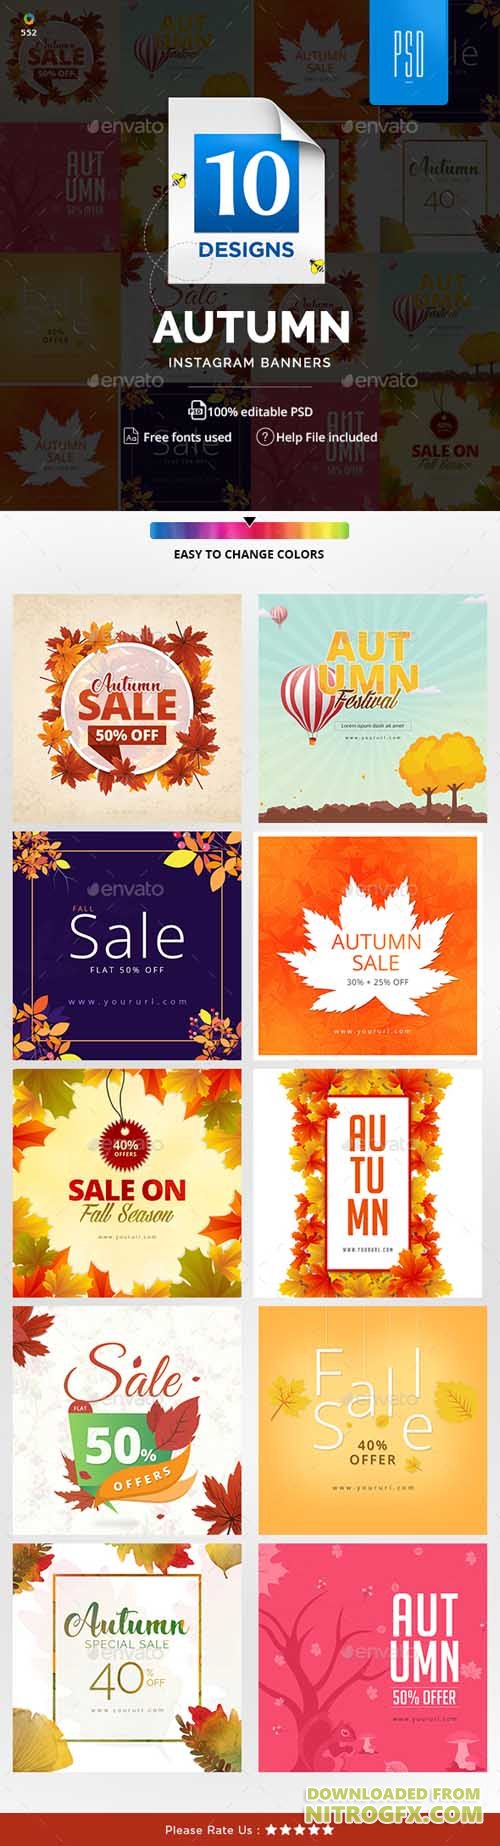 GraphicRiver - Autumn Sale Instagram Templates - 20593121